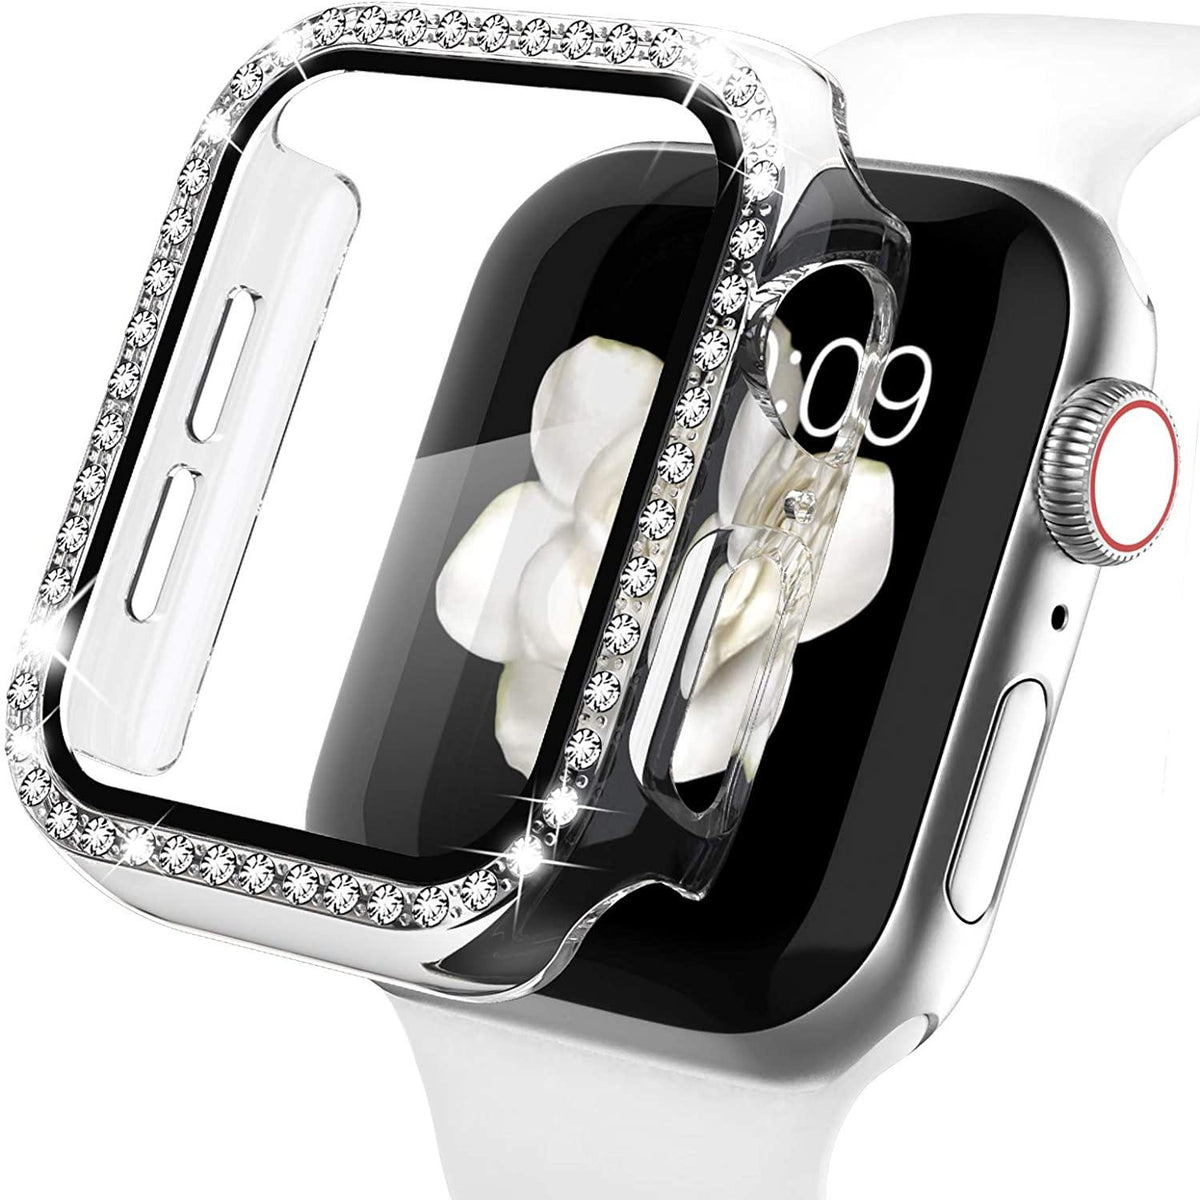 Diamond Apple Watch CaseCase Material: PlasticItem Type: Watch Cases[focus_keyword]Apple Phone CaseArleathercraft